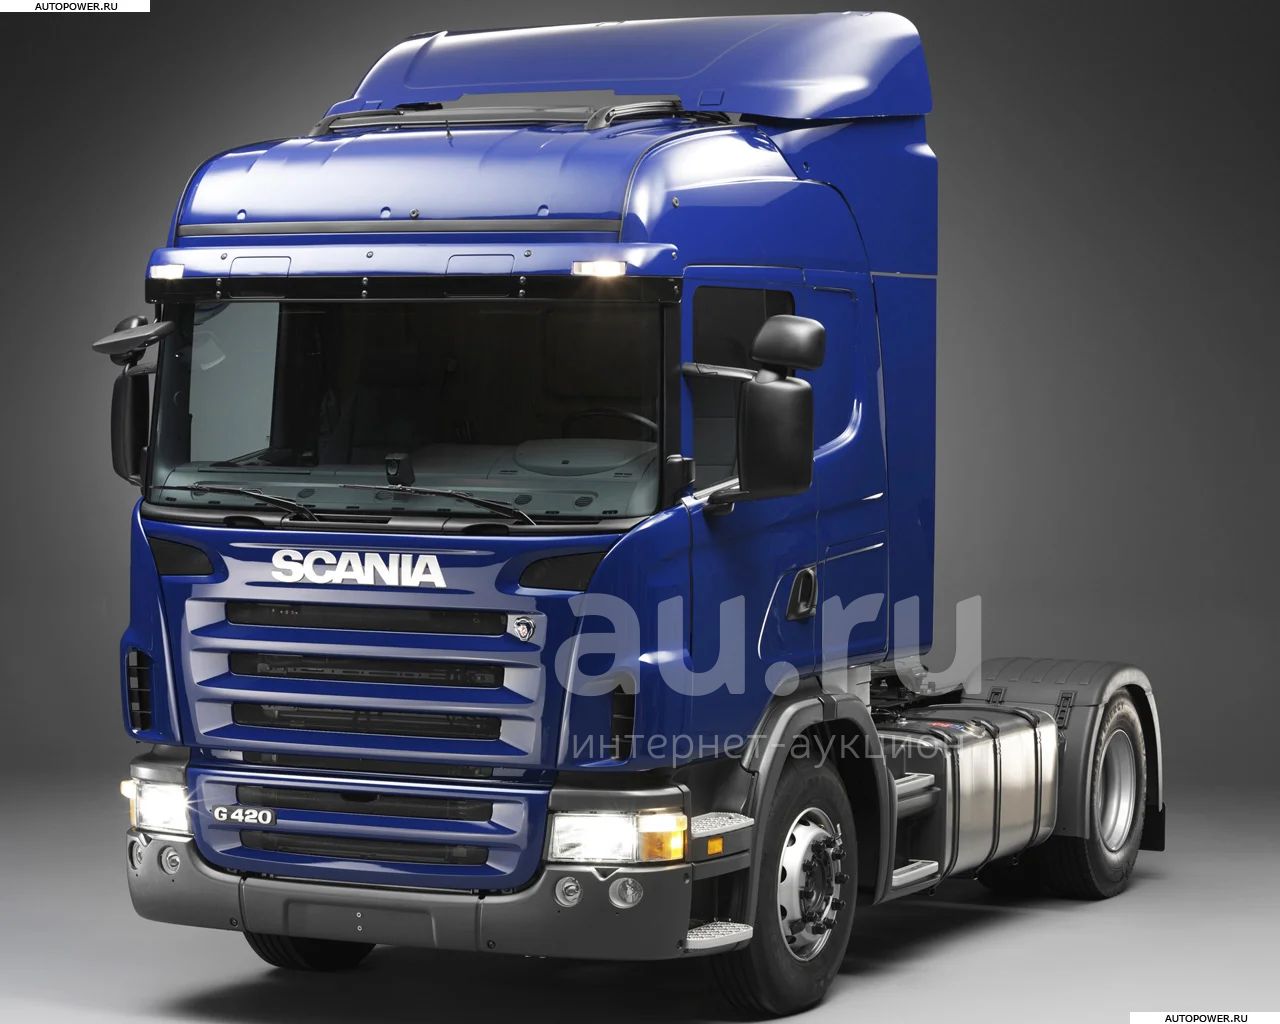 Scania 5 series. Скания тягач g420. Скания r340. Скания g 440 тягач. Скания 420 грузовик.